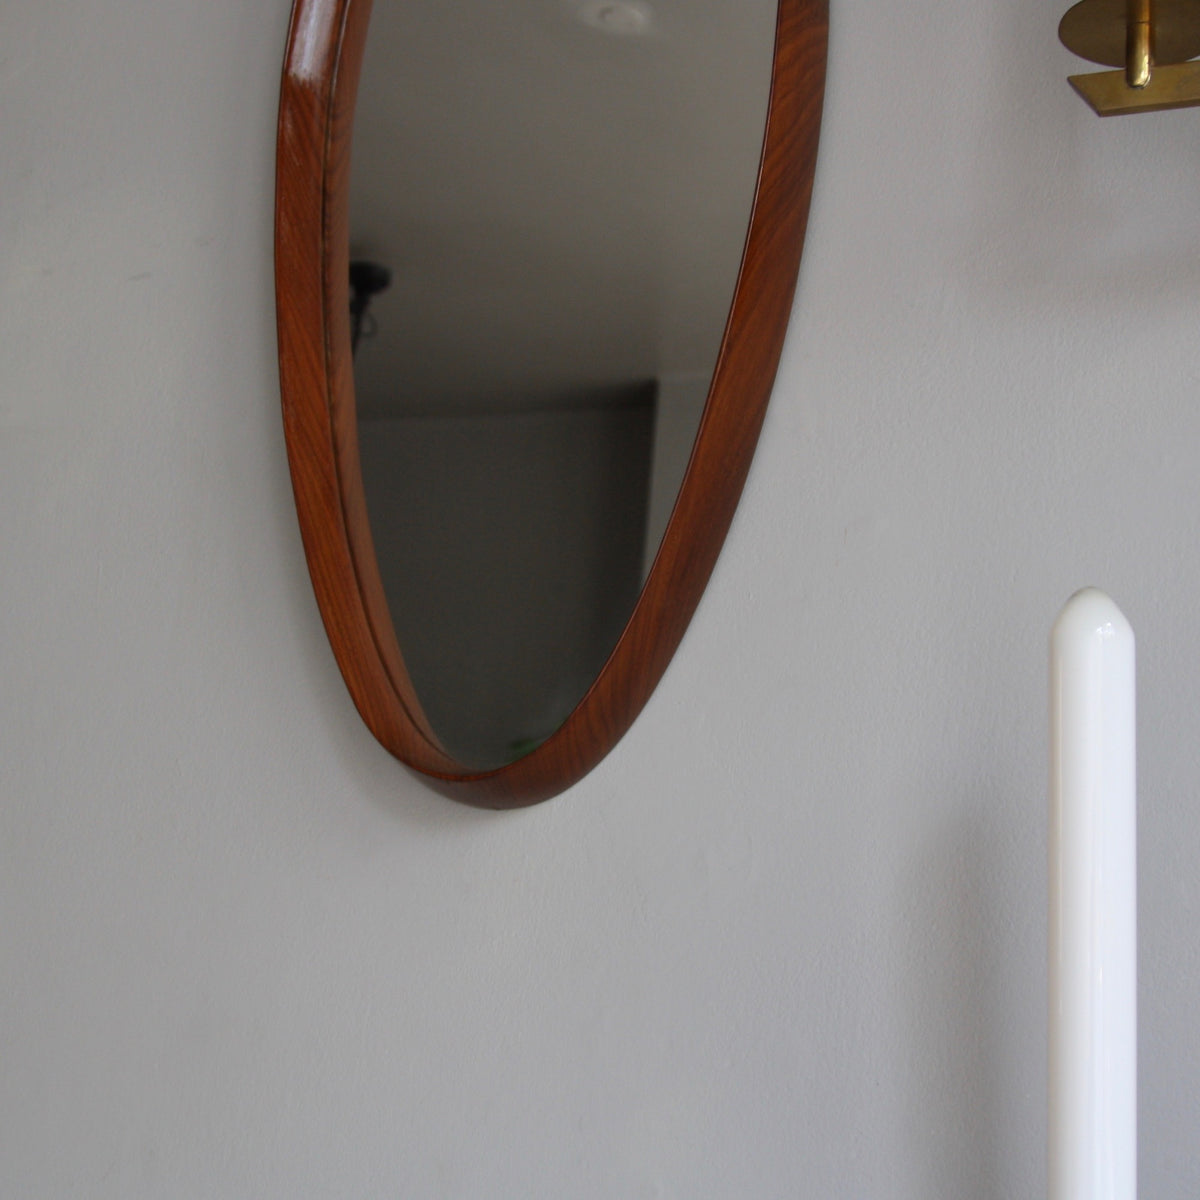 Vintage Teak Oval Mirror with Leather Denmark C. 1950 - Image 2